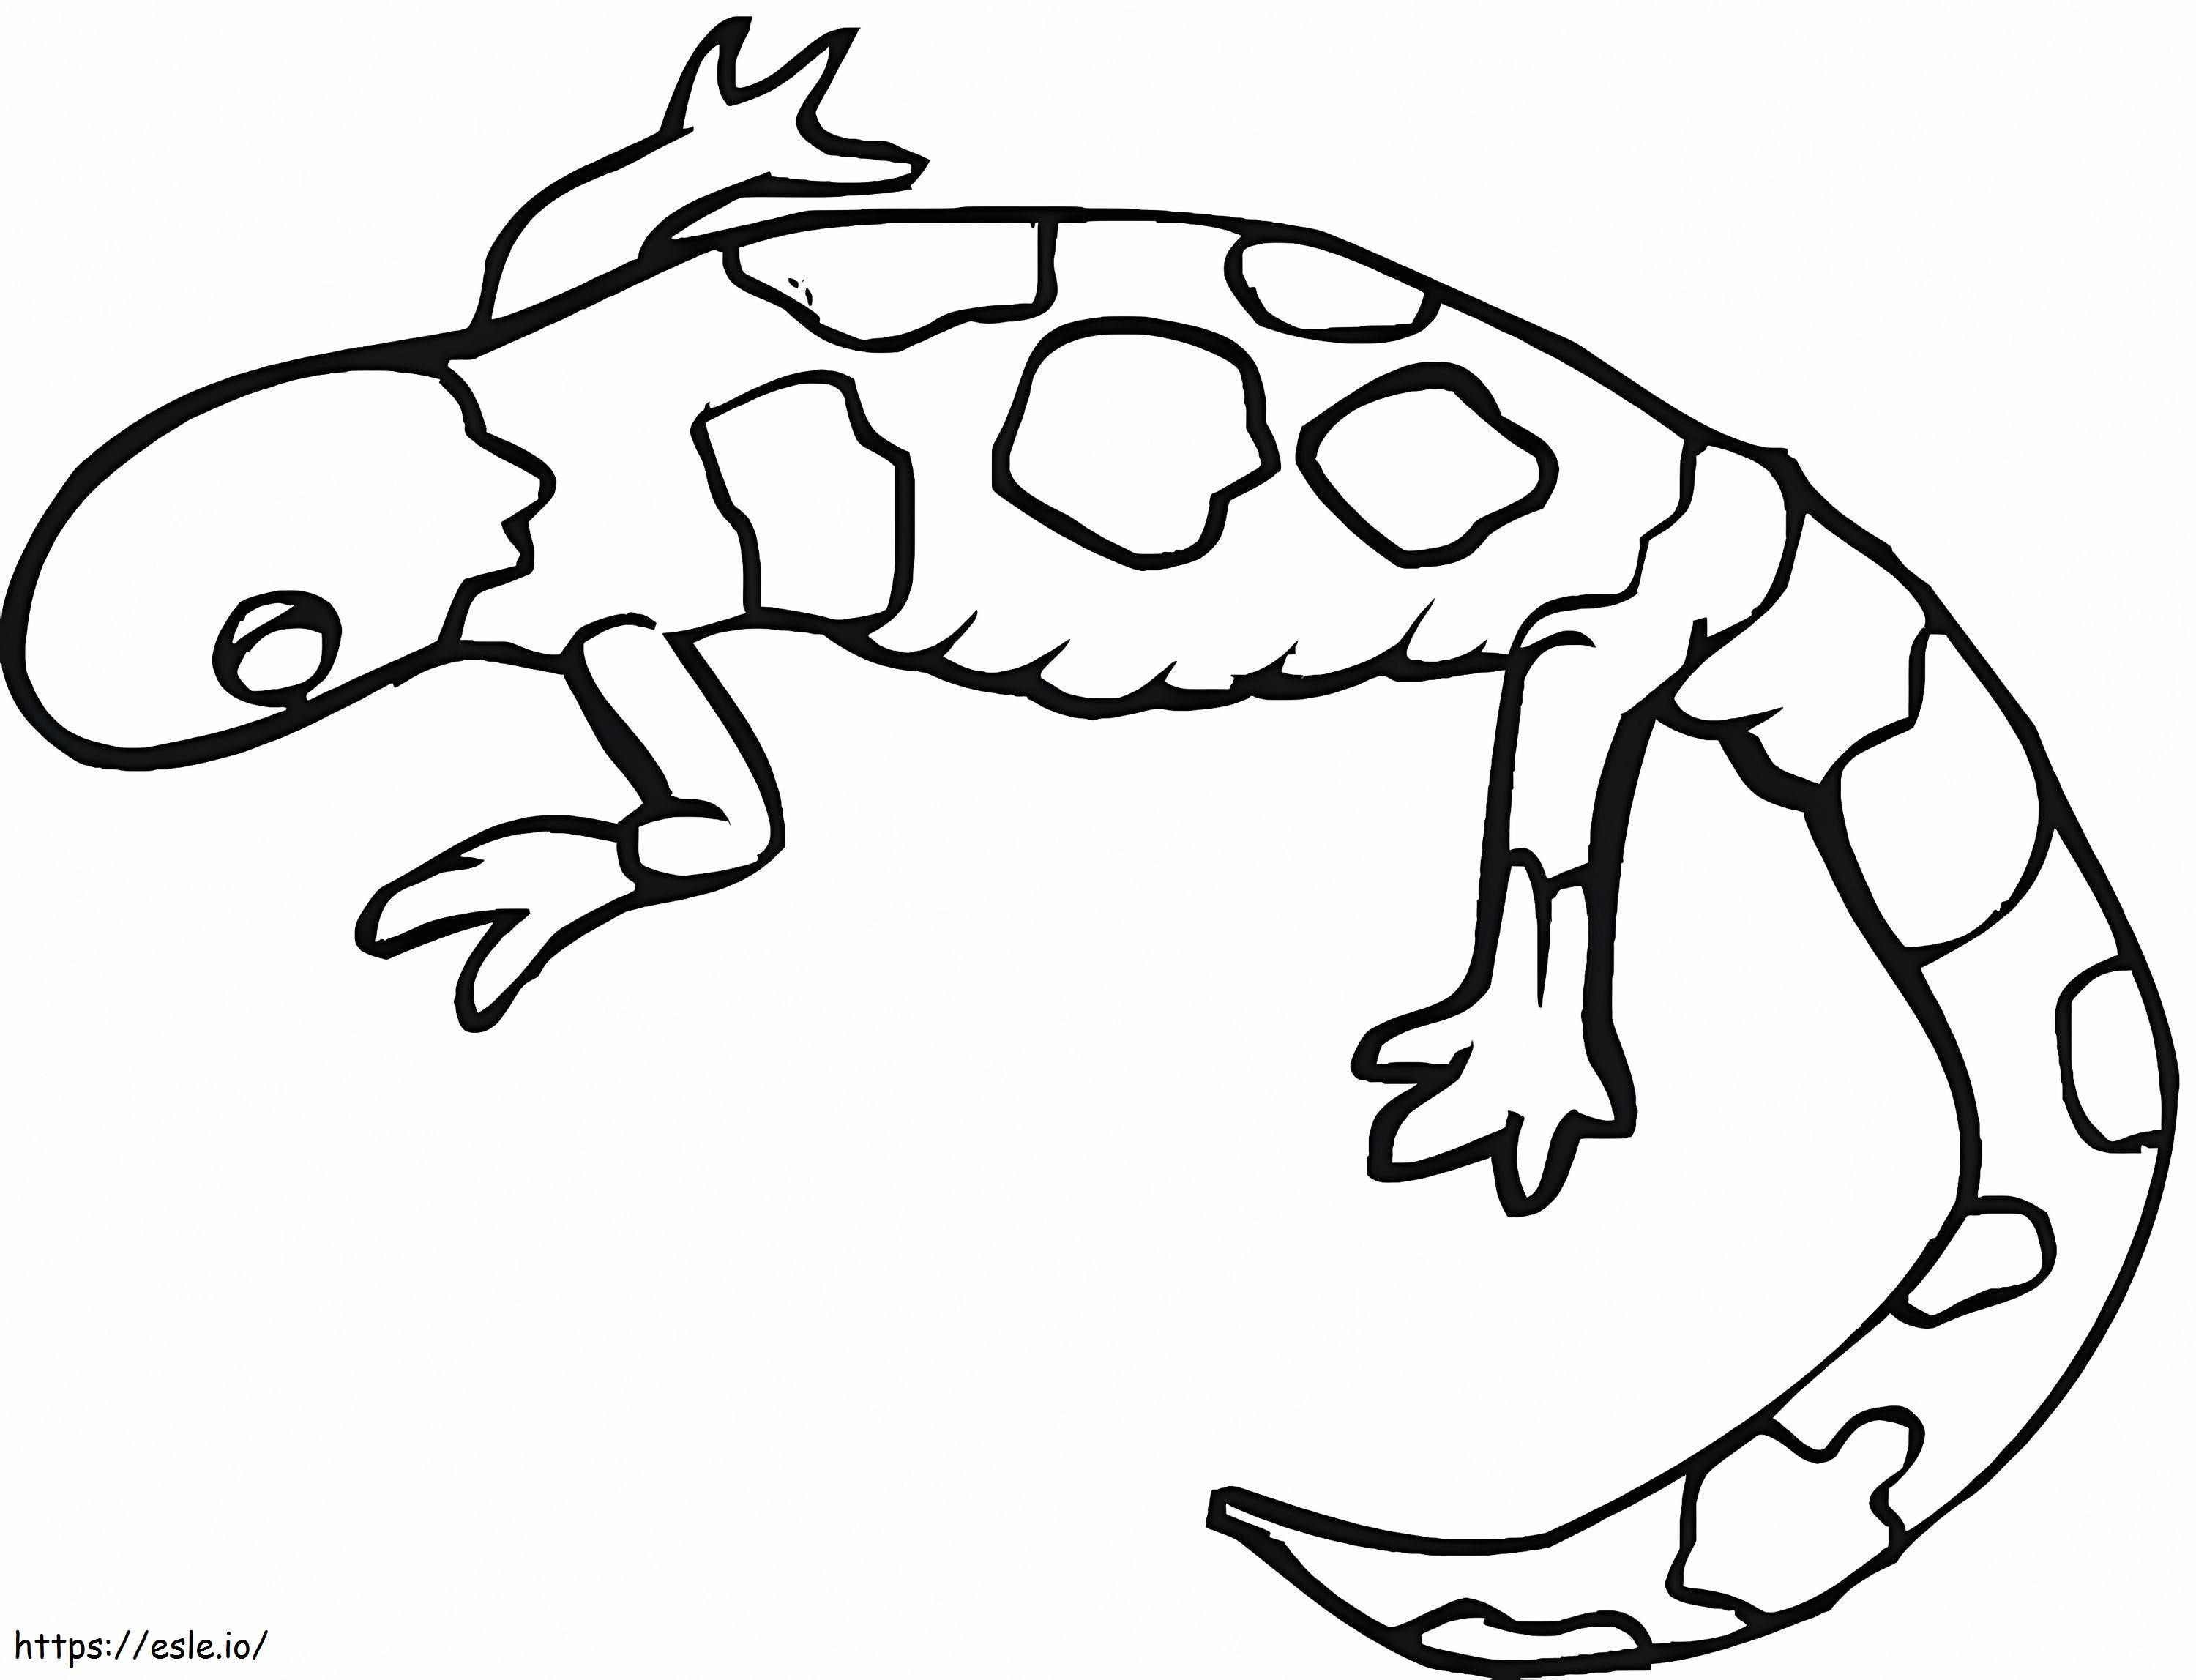 Gecko-Farbe ausmalbilder